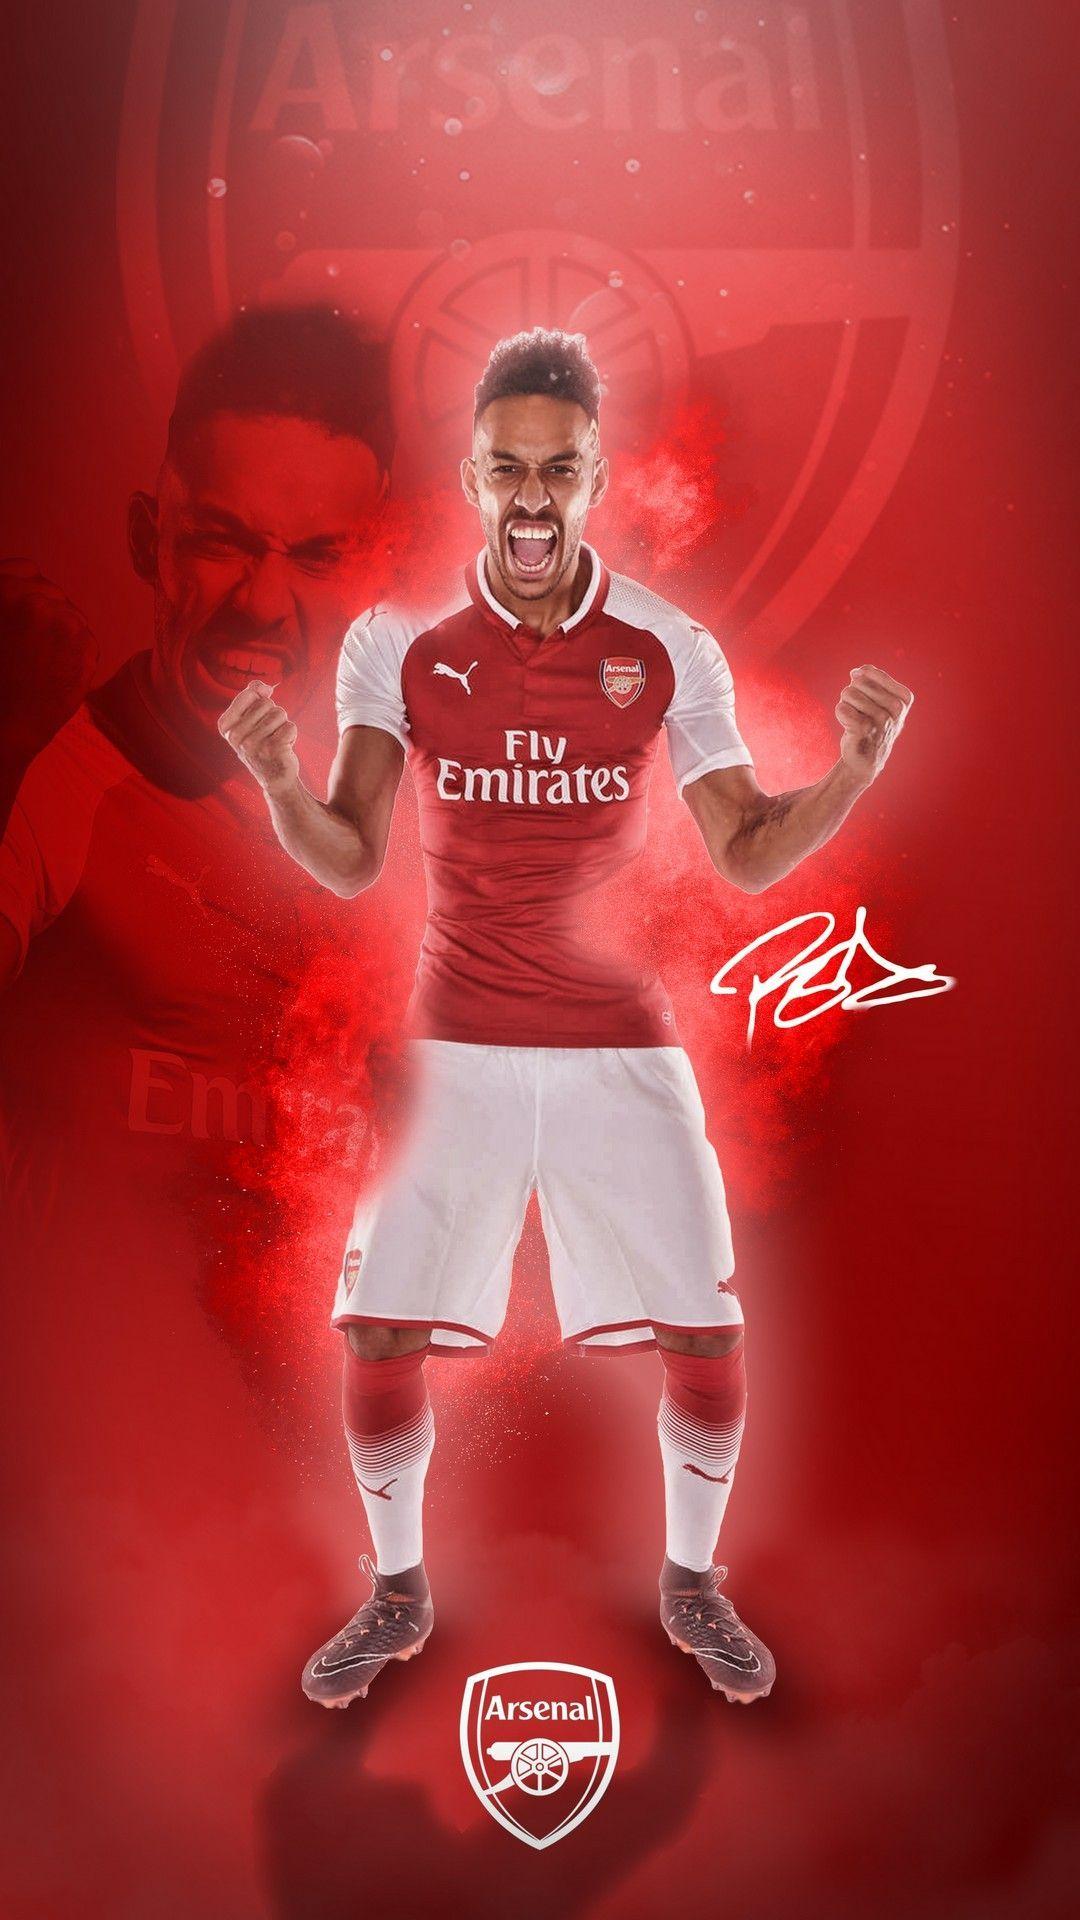 Aubameyang Arsenal Players Android Wallpaper. Arsenal players